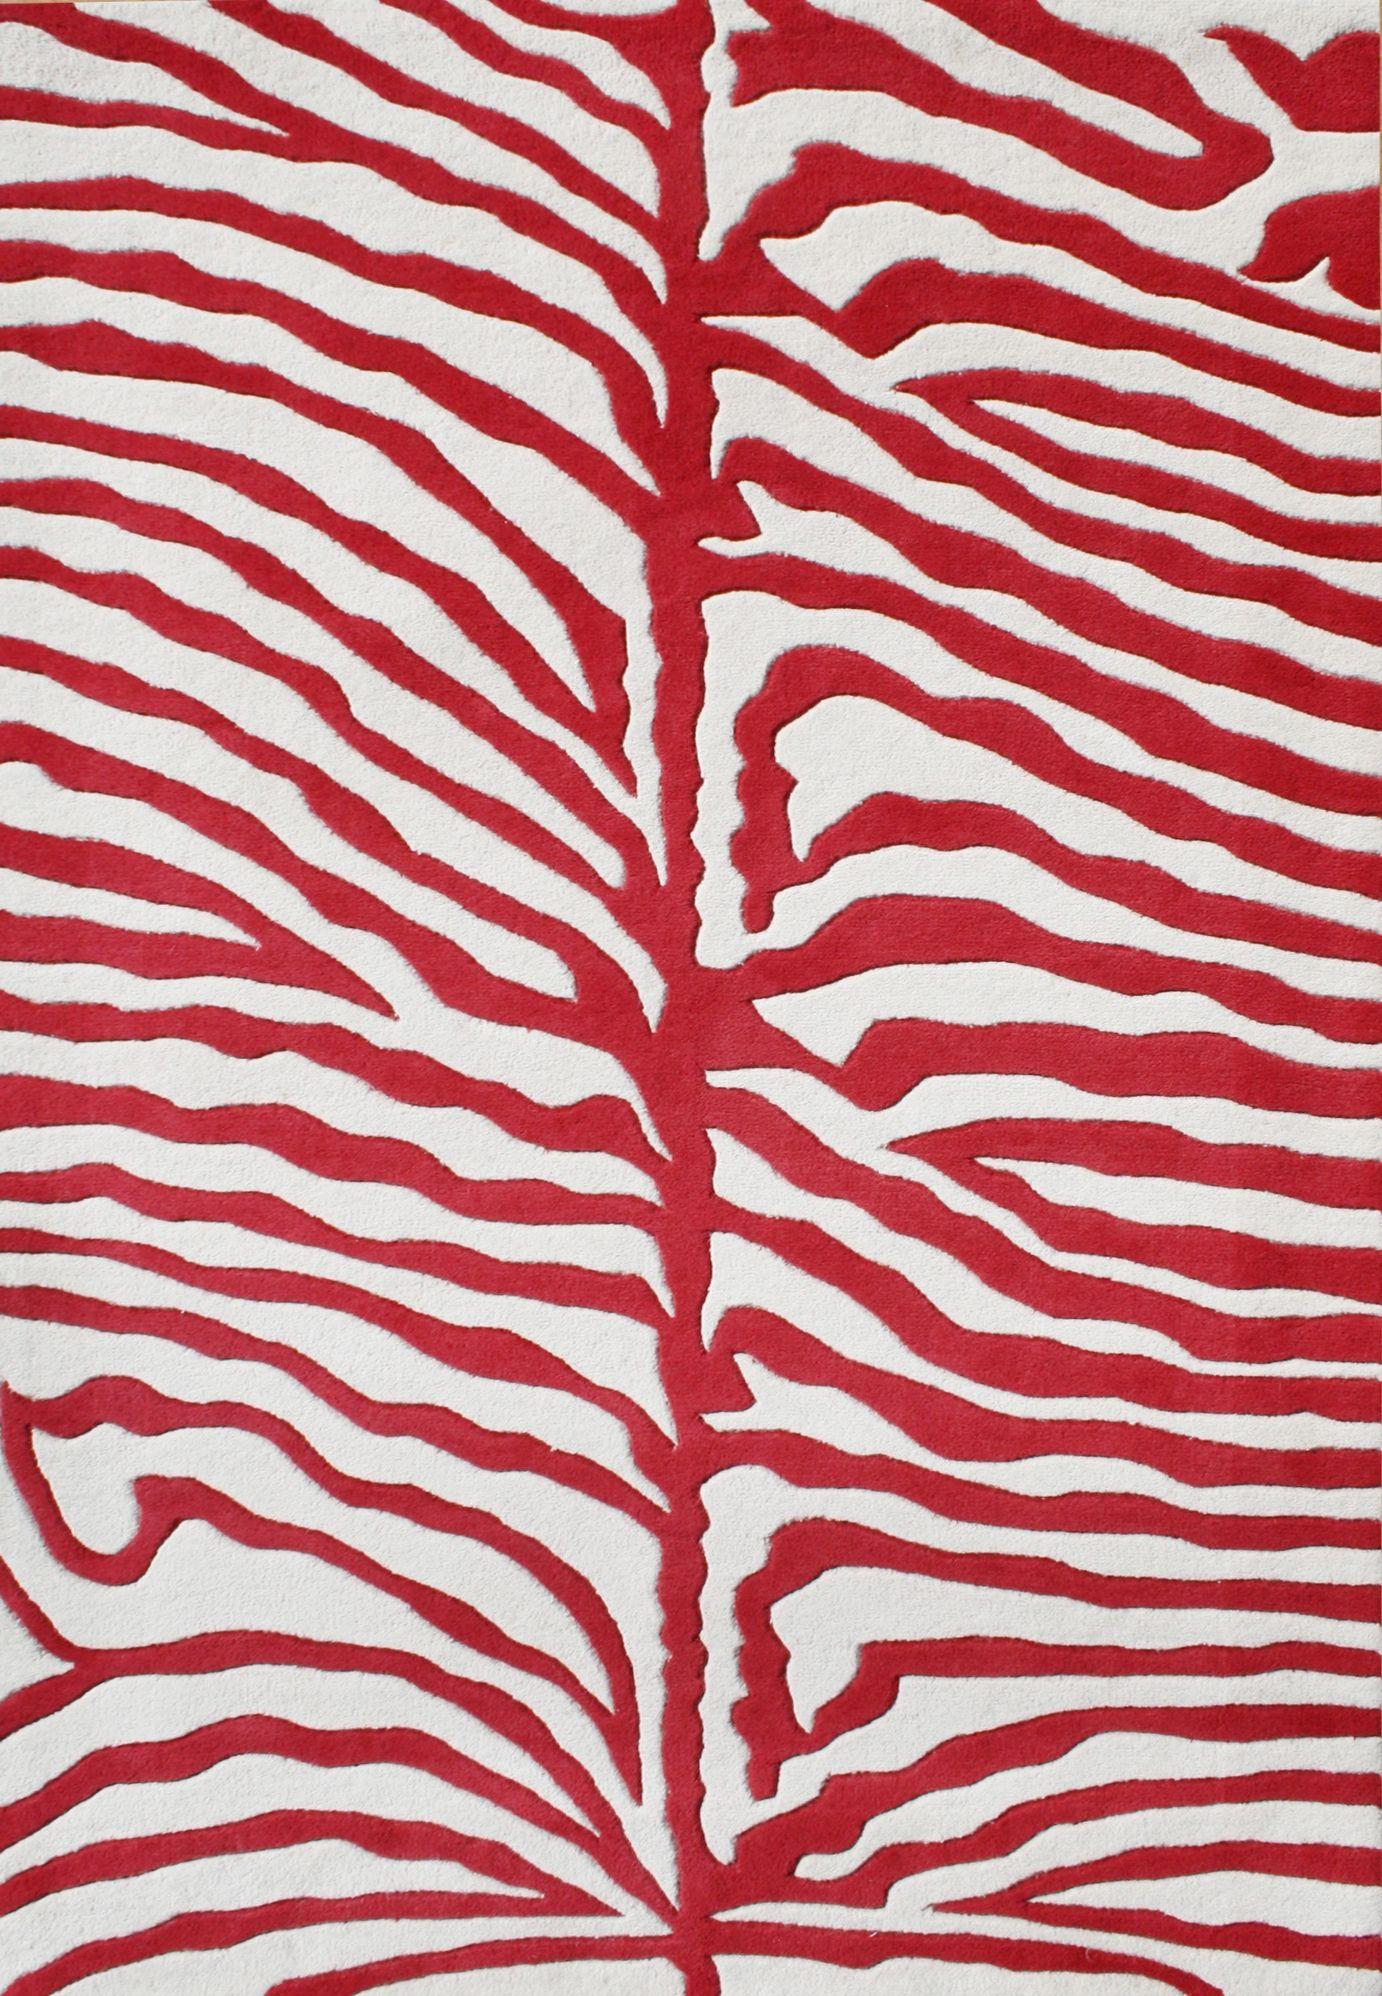 Red Zebra iPhone Wallpapers - Wallpaper Cave